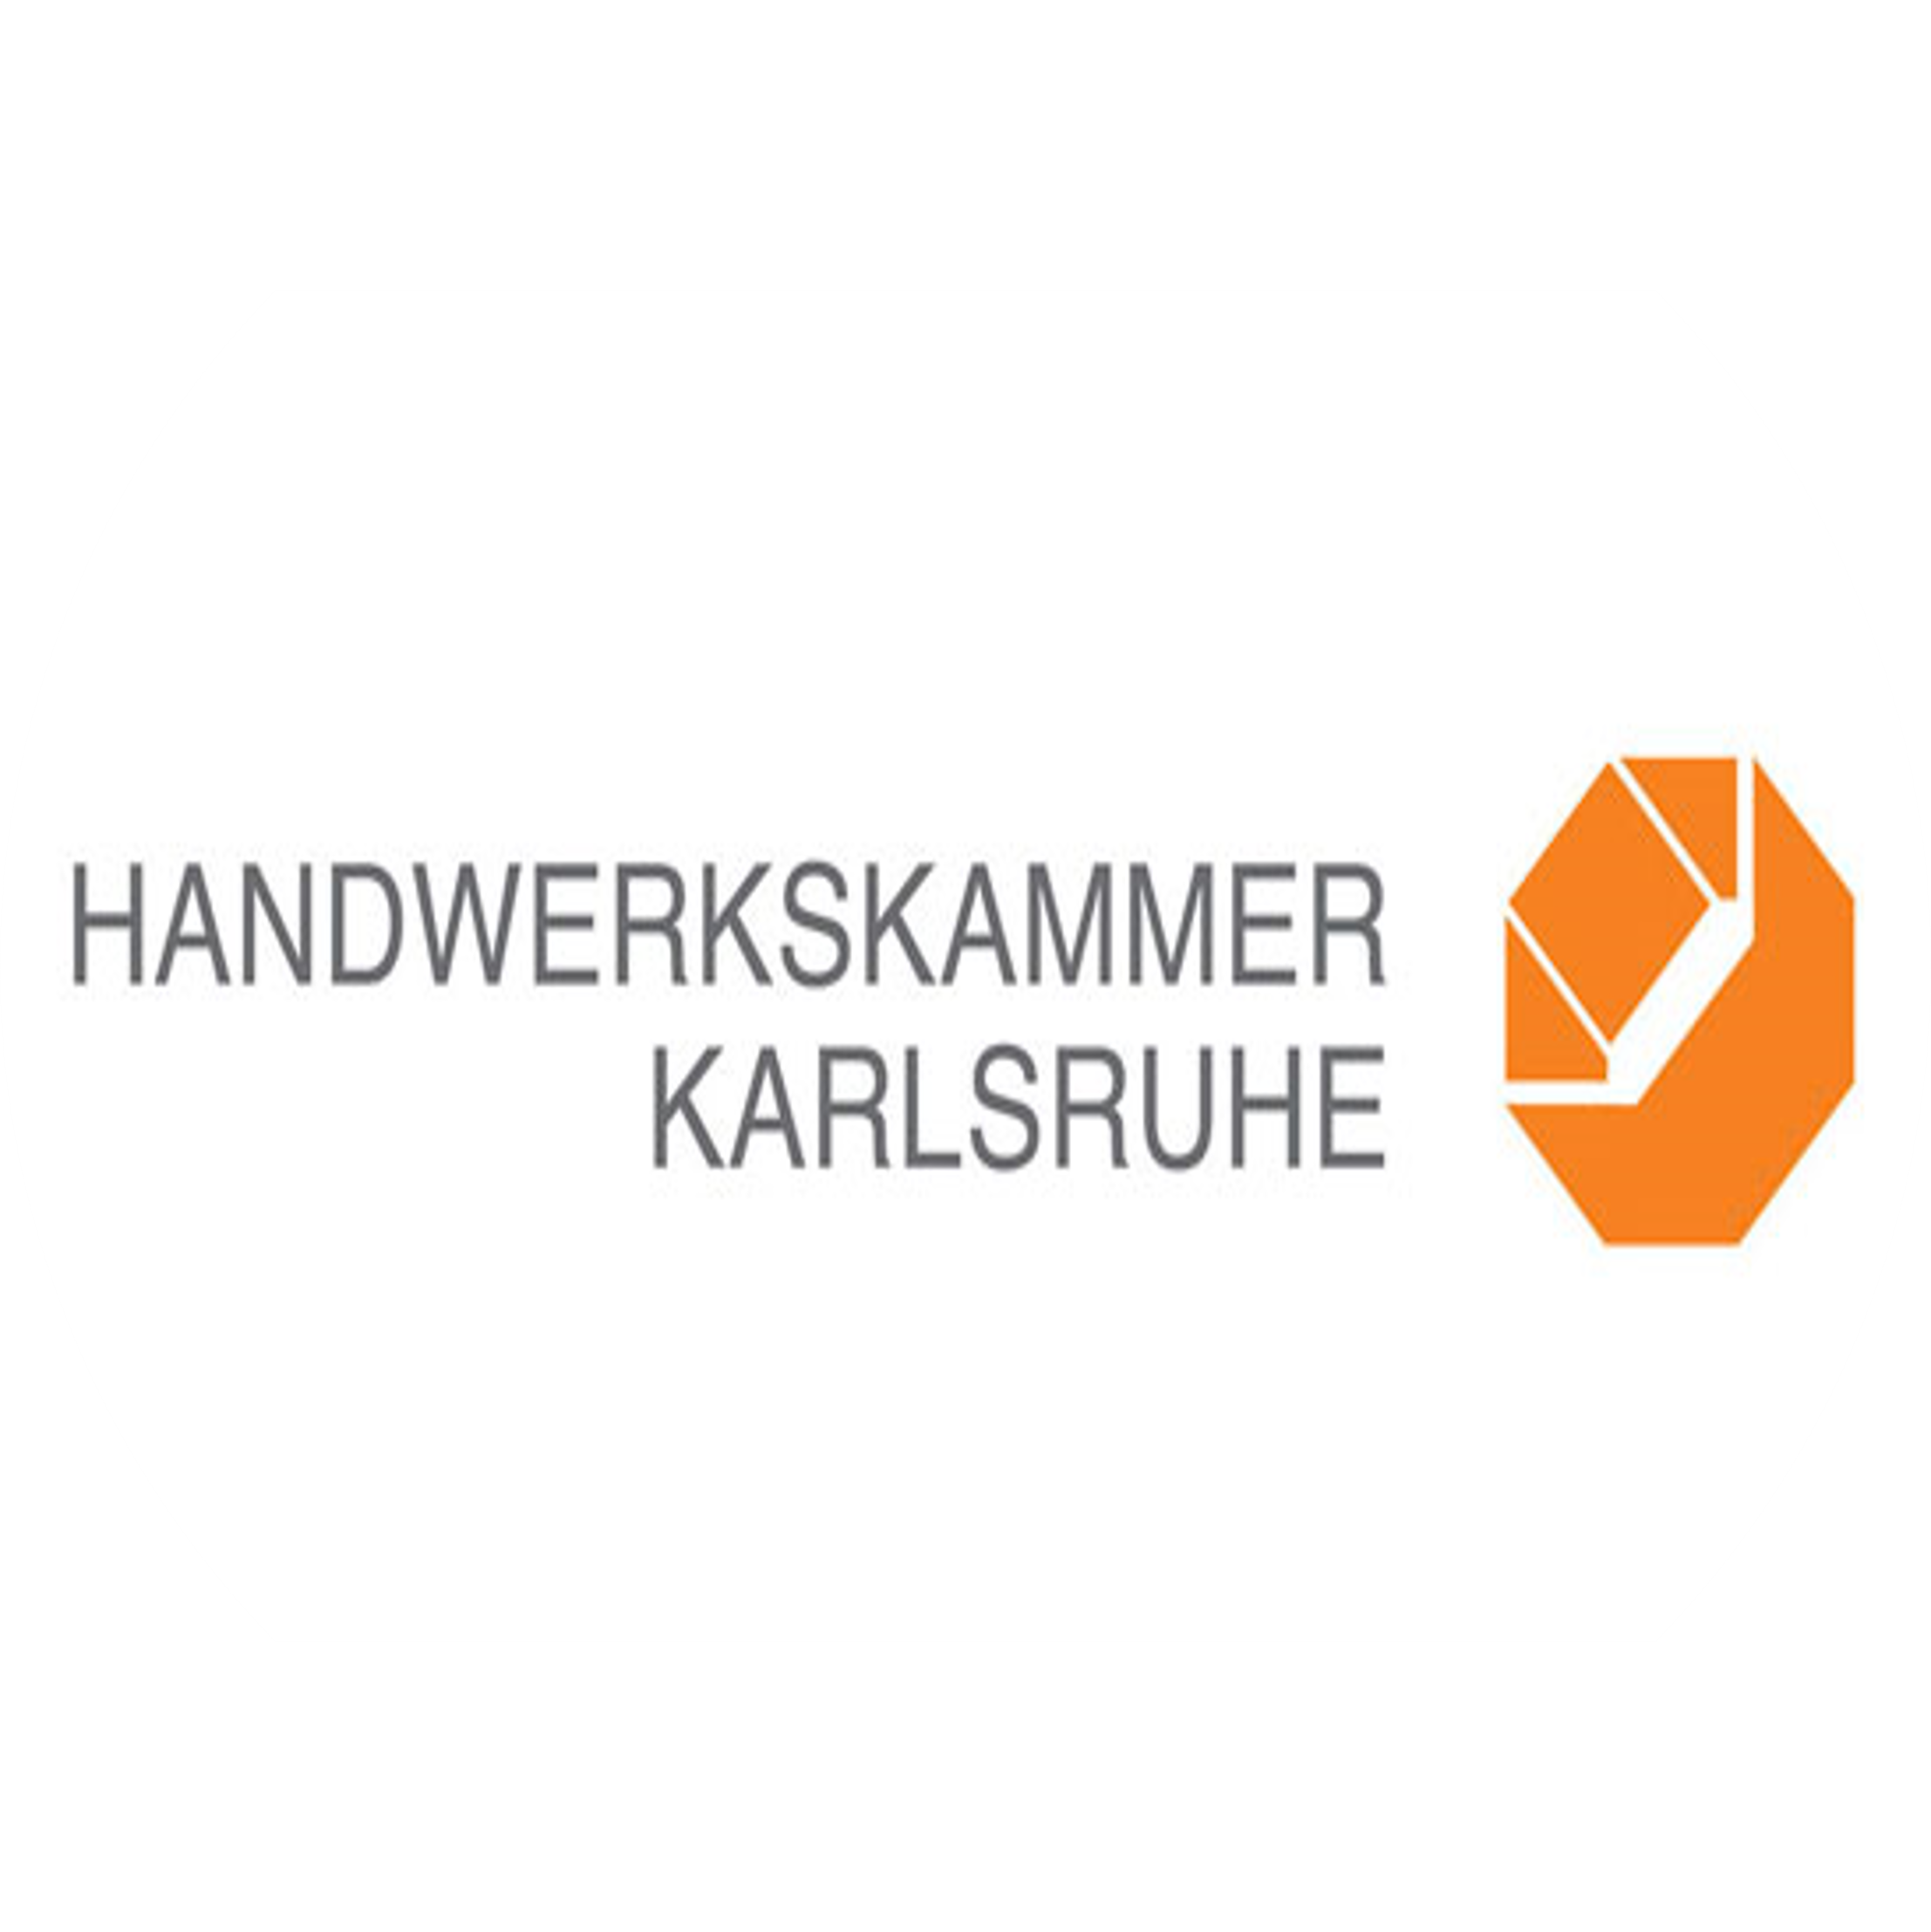 Handwerkskammer Karlsruhe (HWK)